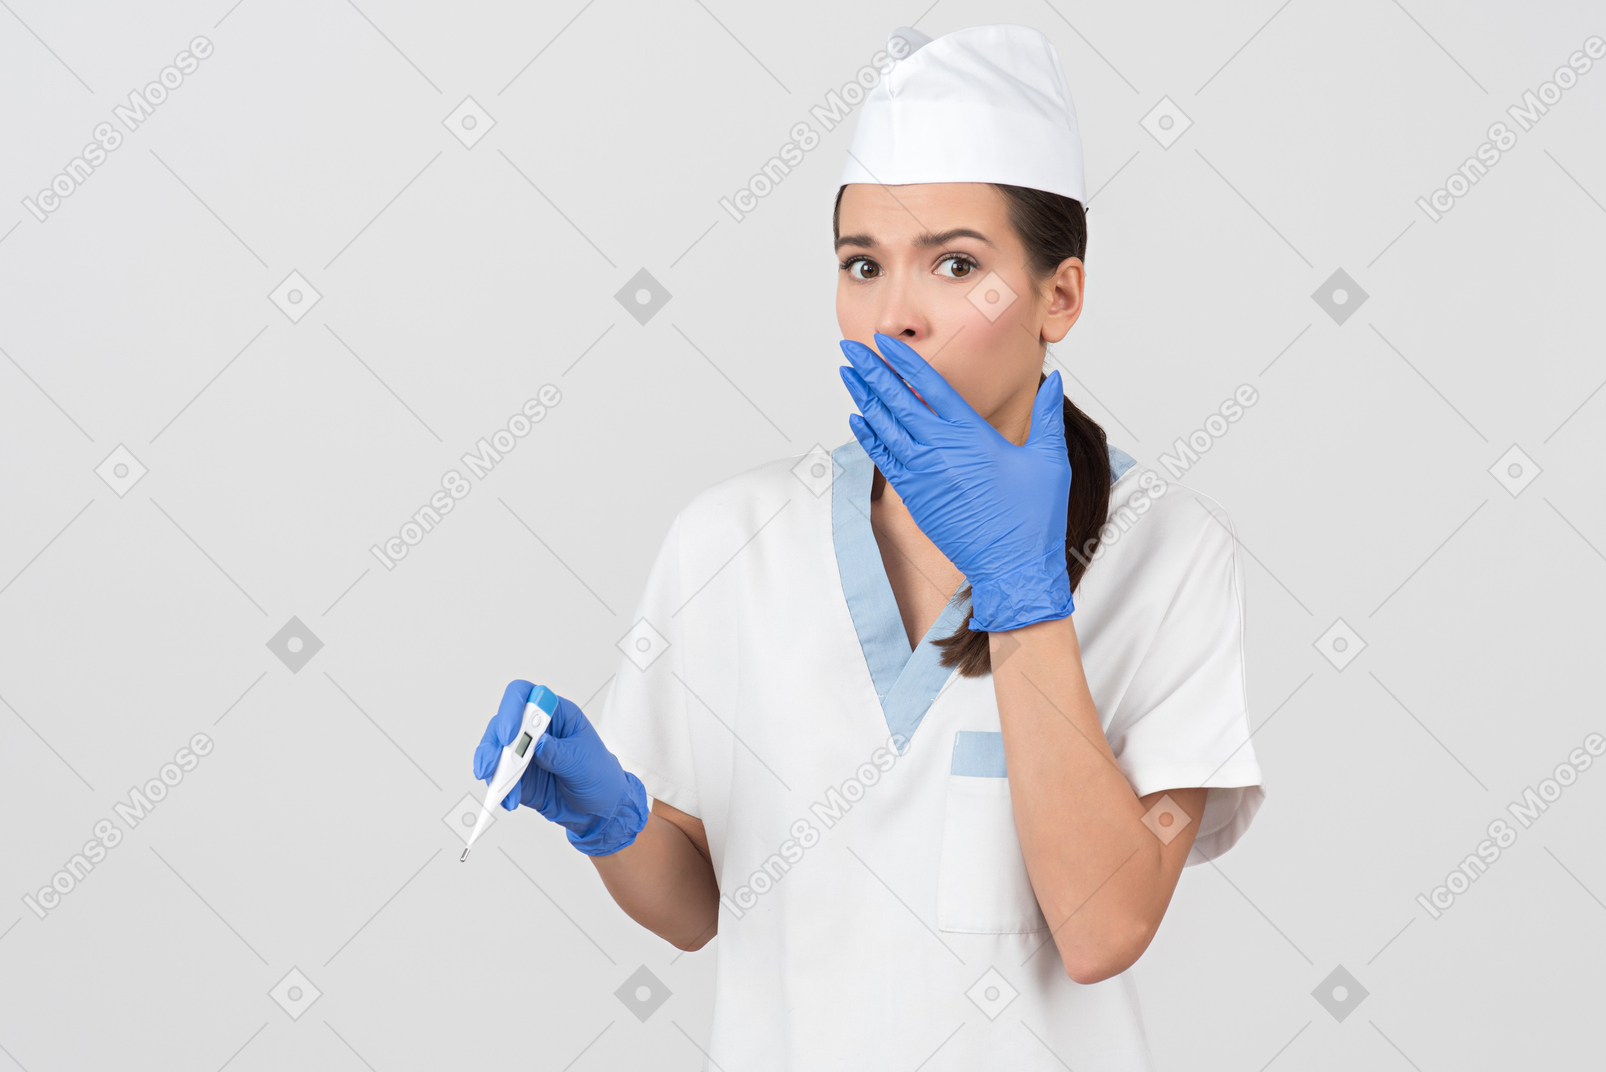 Attractive nurse gasping at patient's temperature